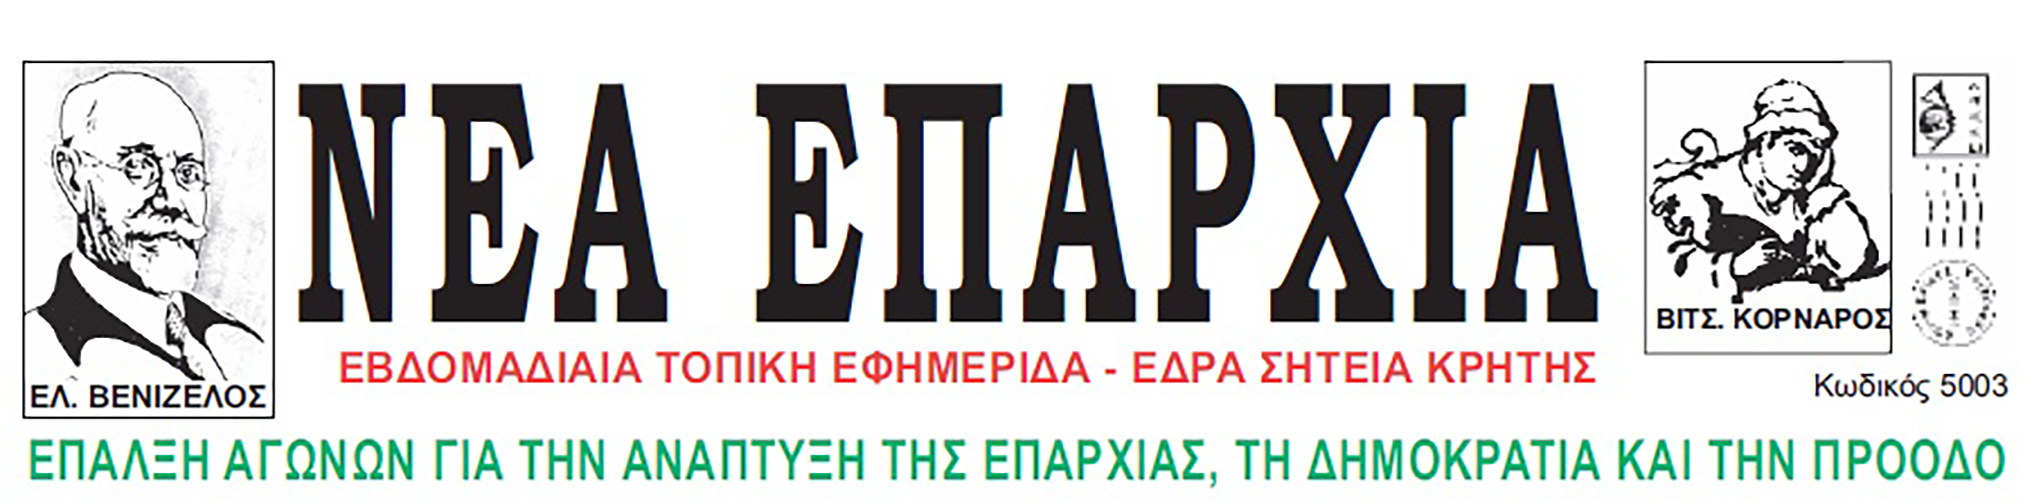 Nea Eparxia newspaper is one of the TEDxSitia 2023 sponsors.